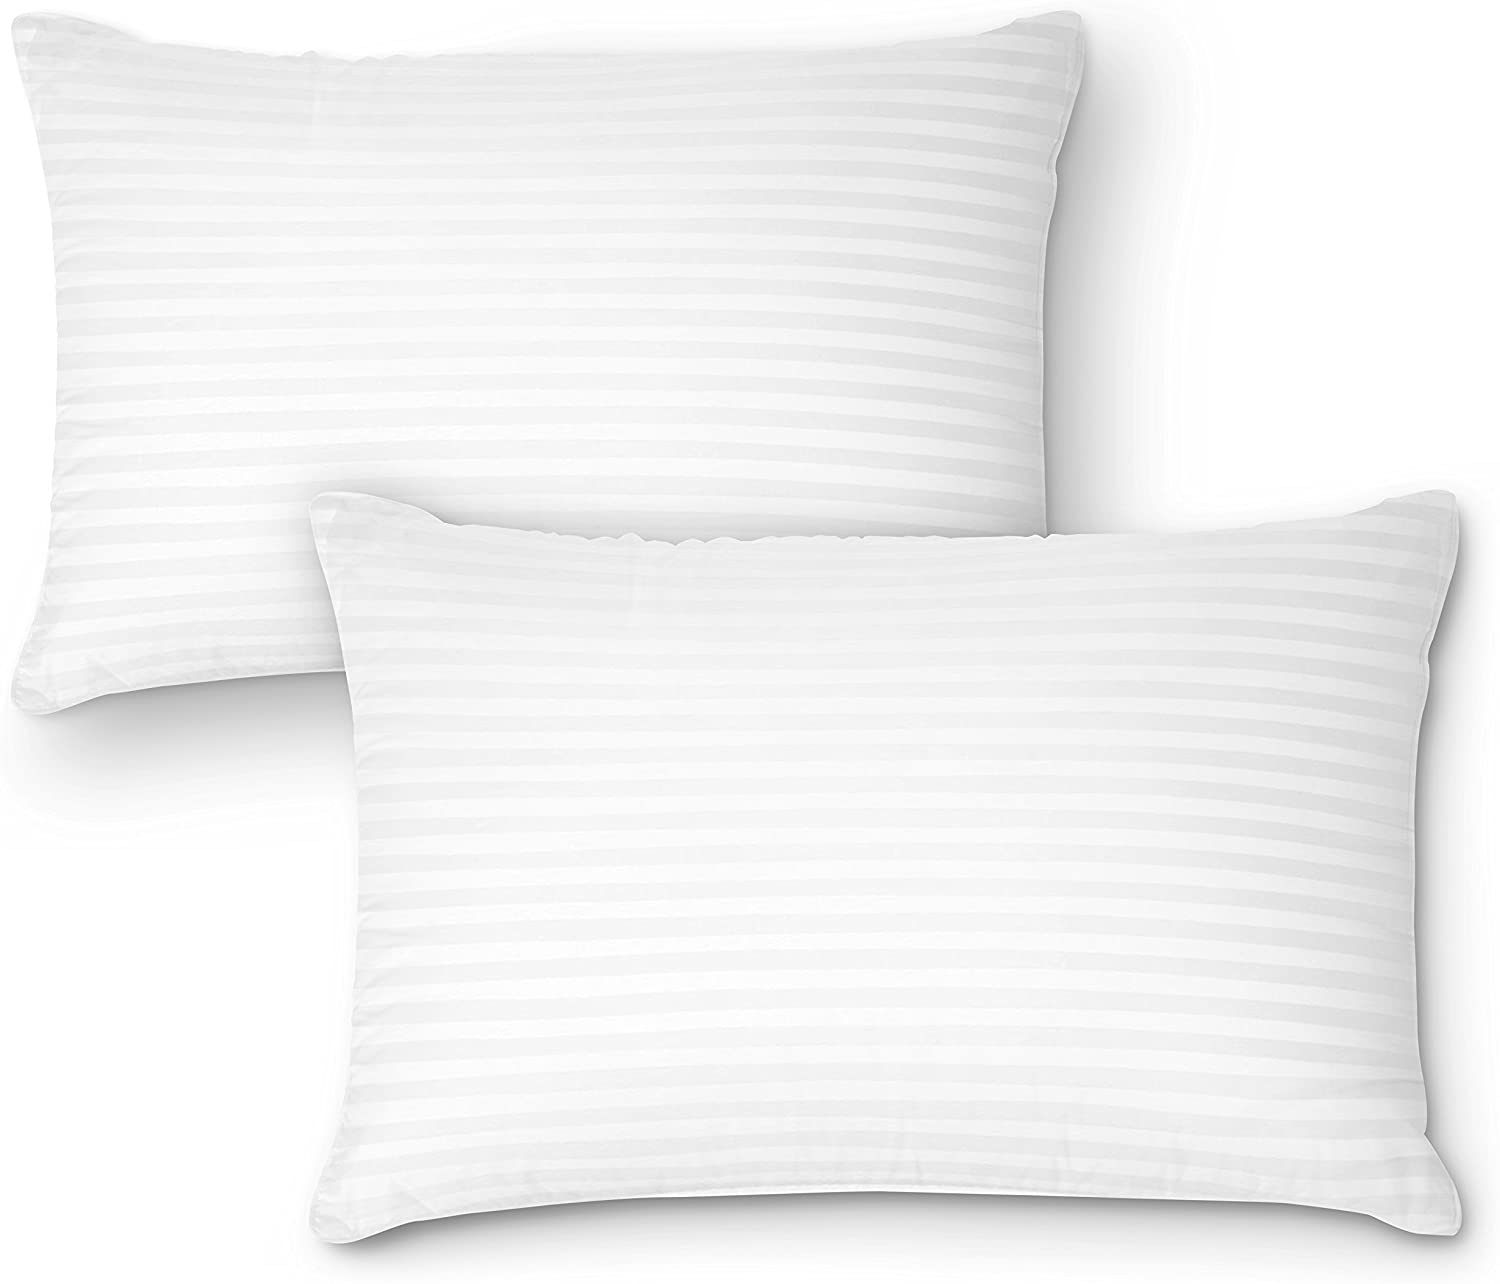 DreamNorth Premium Gel Pillow 